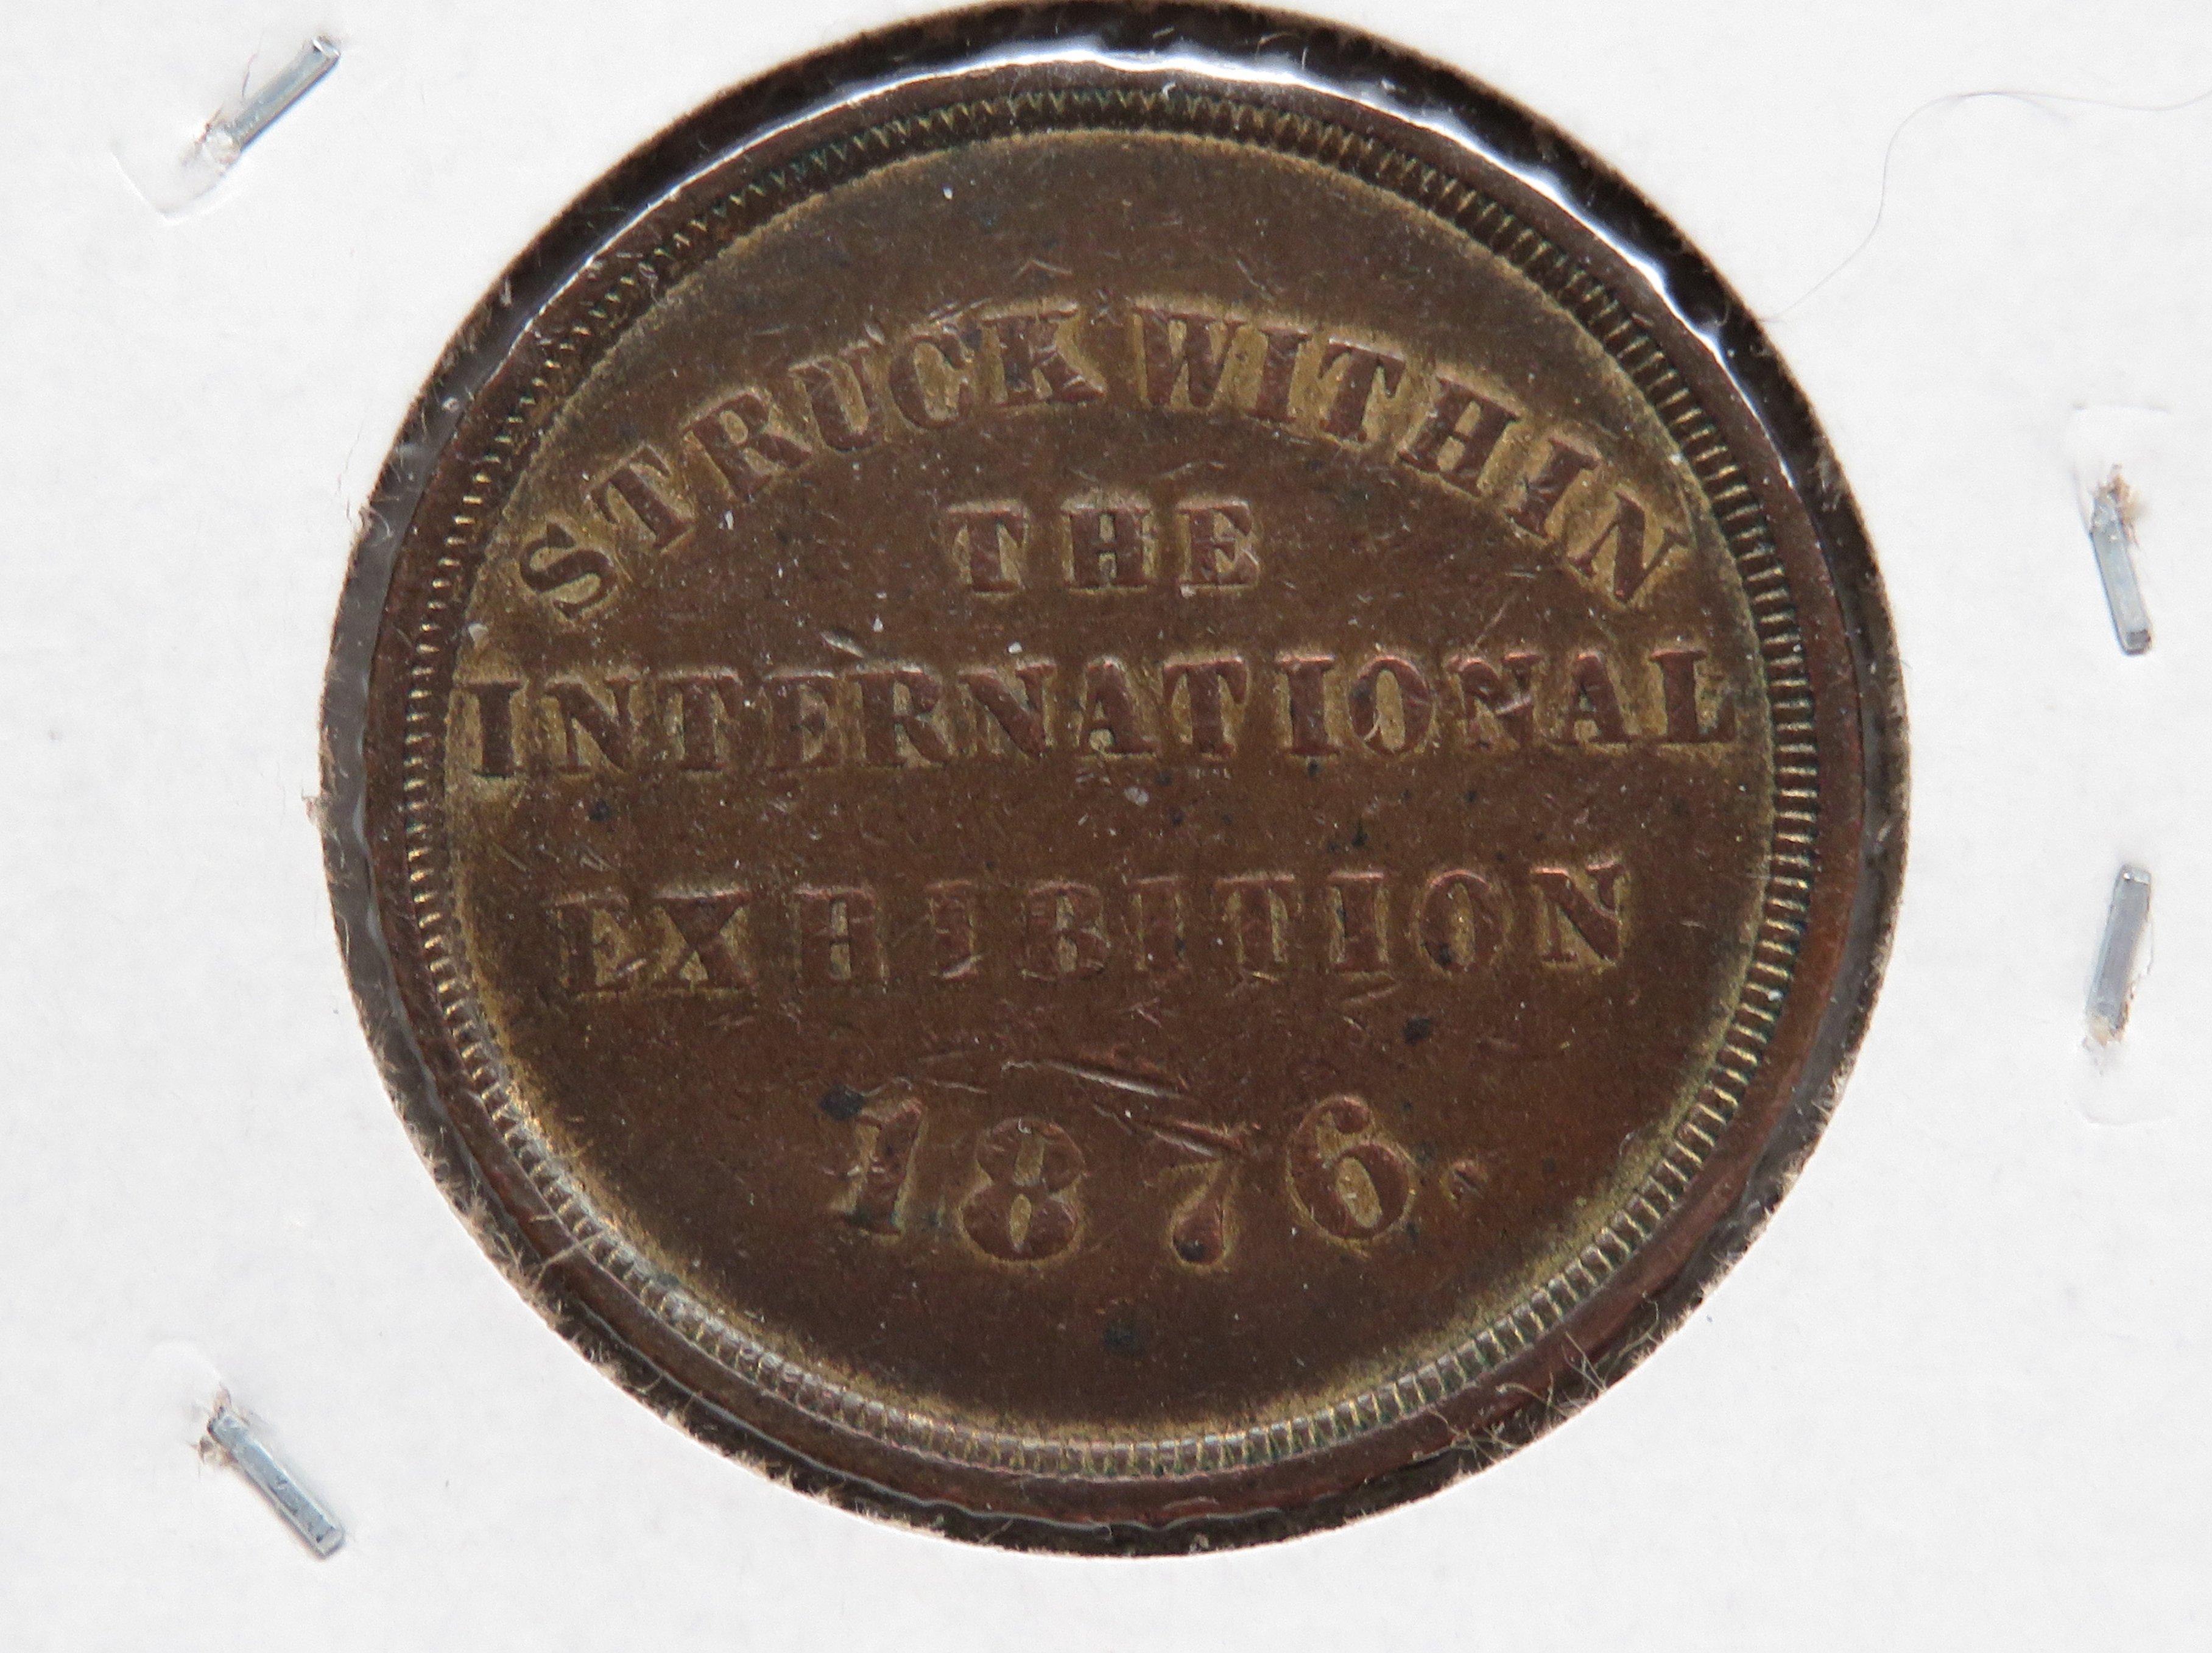 1876 USA Centennial Medal "Struck within the International Expo"